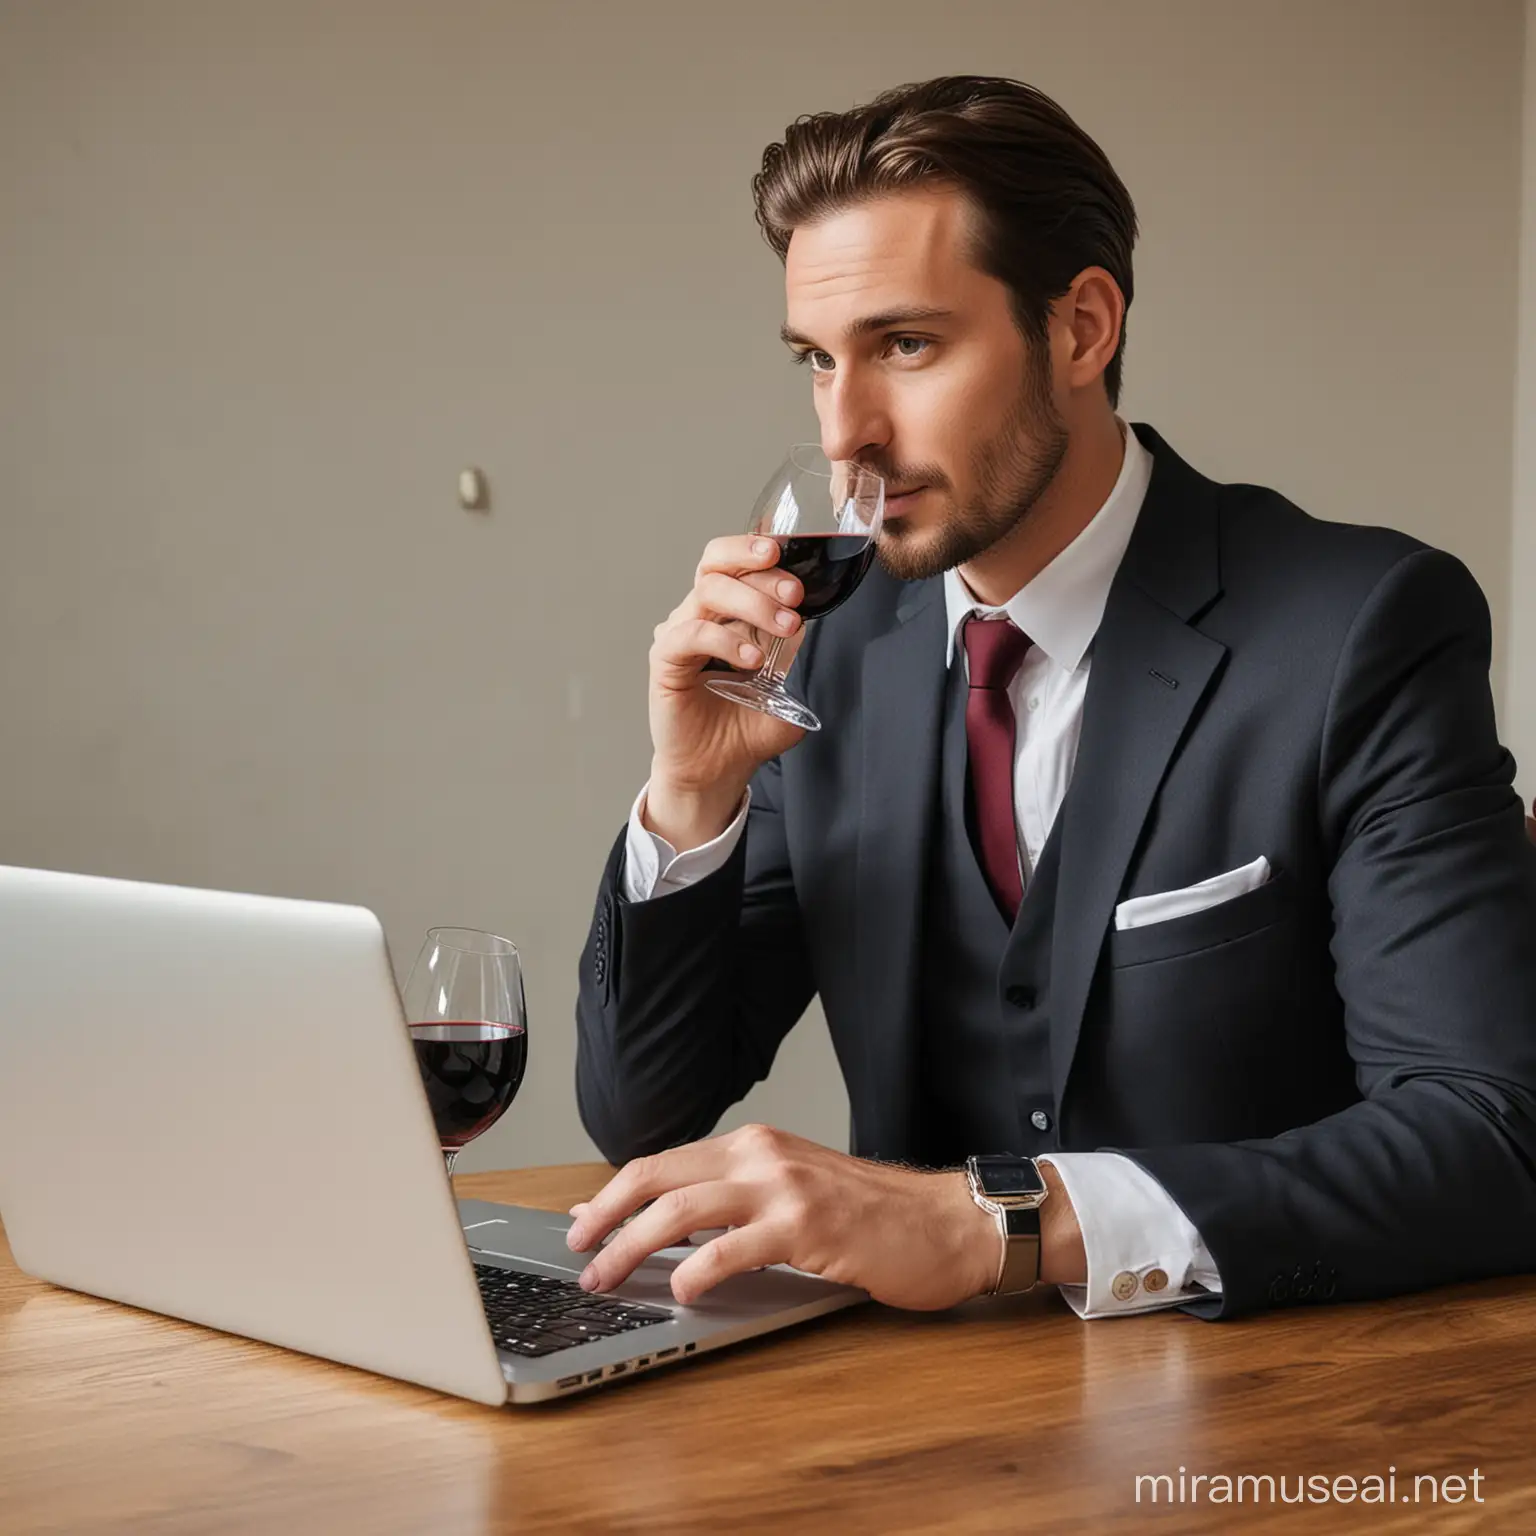 Businessman Enjoying Wine While Working on Laptop